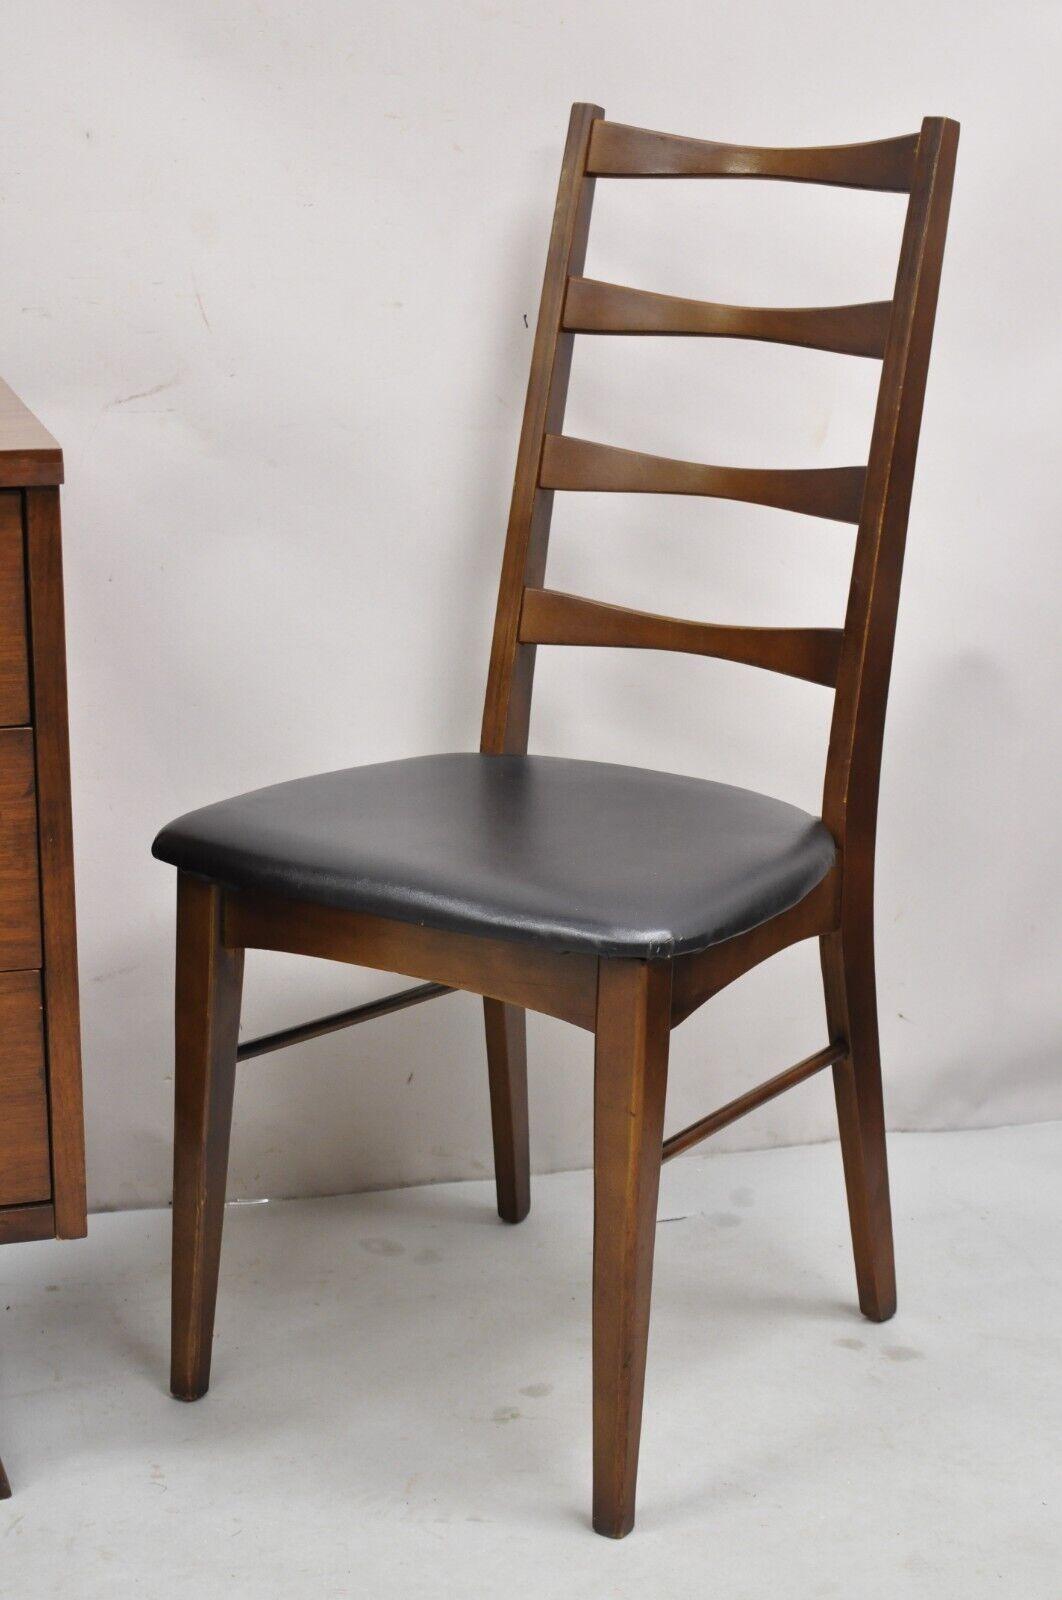 Veneer Vintage Mid Century Modern Walnut Sculpted Legs Kneehole Desk & Chair - 2 Pc Set For Sale